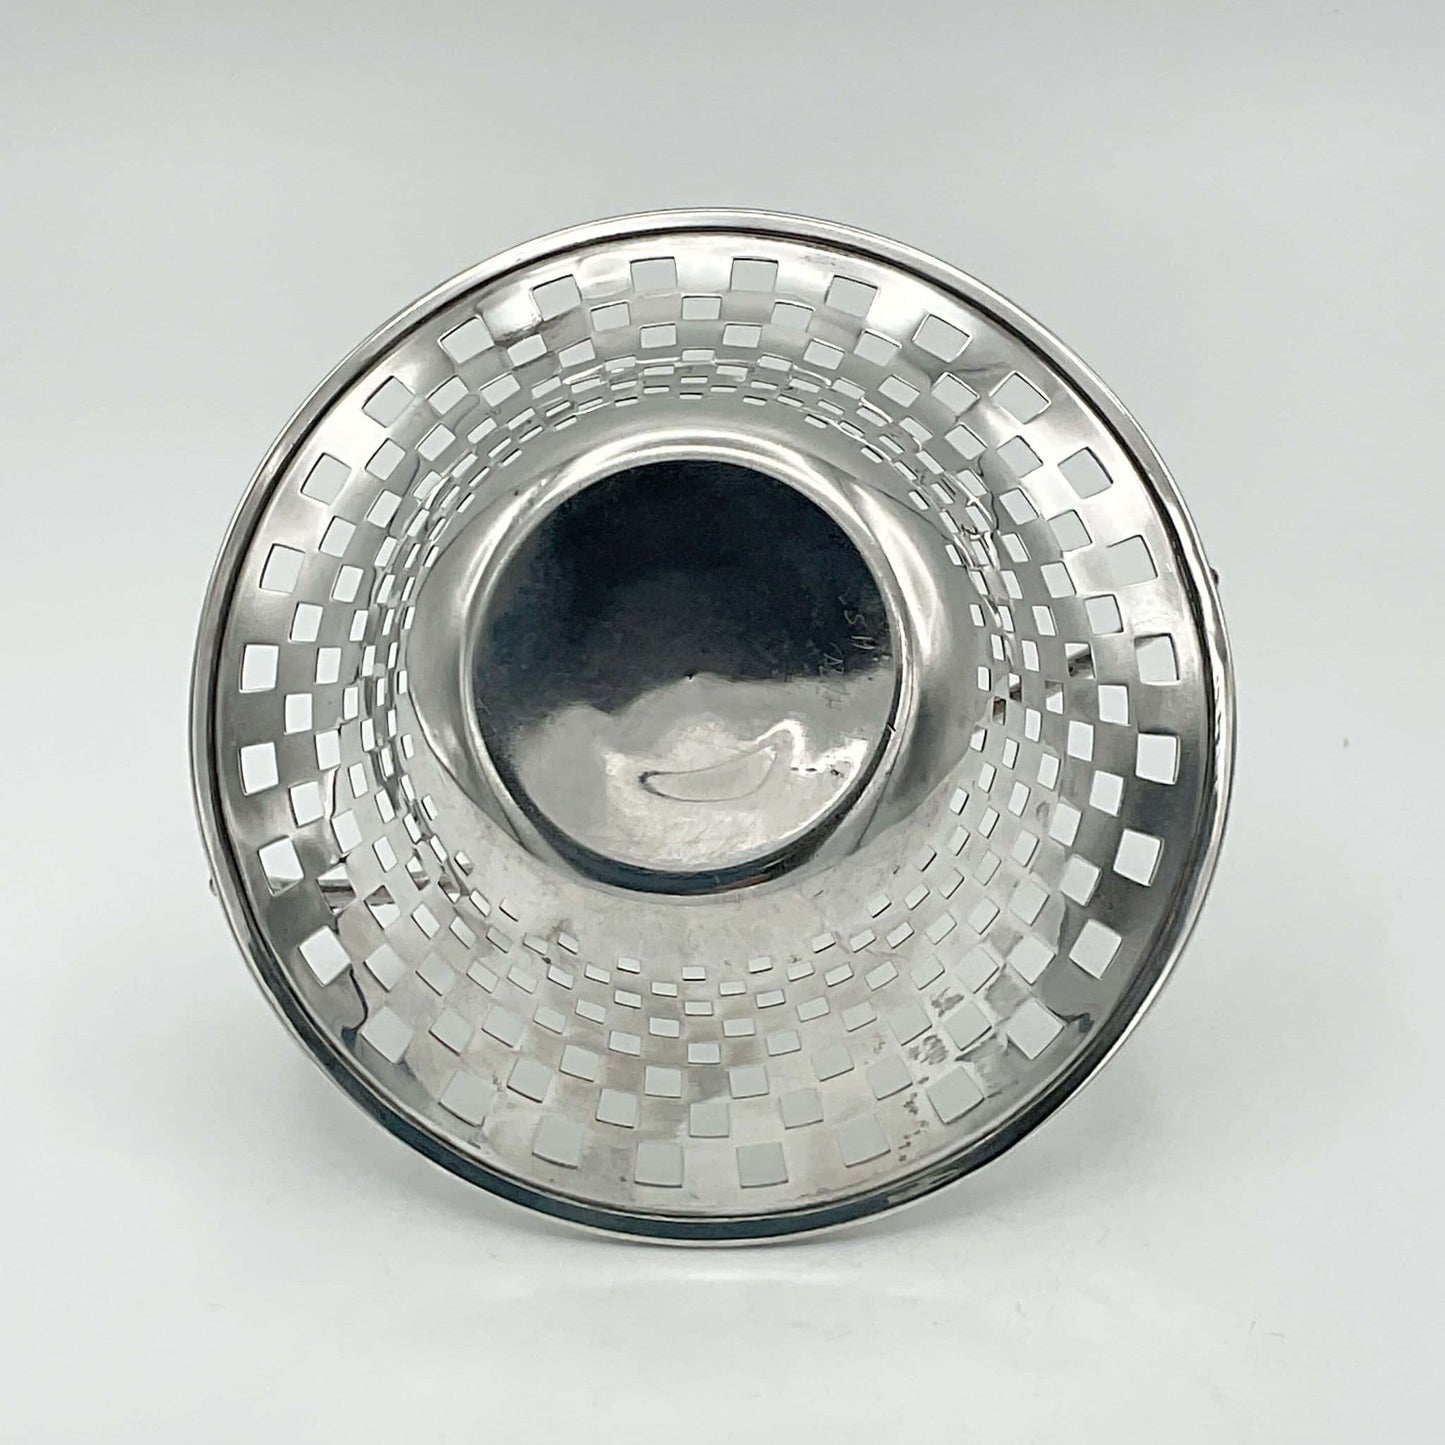 Base of silver basket showing pierced patterned sides